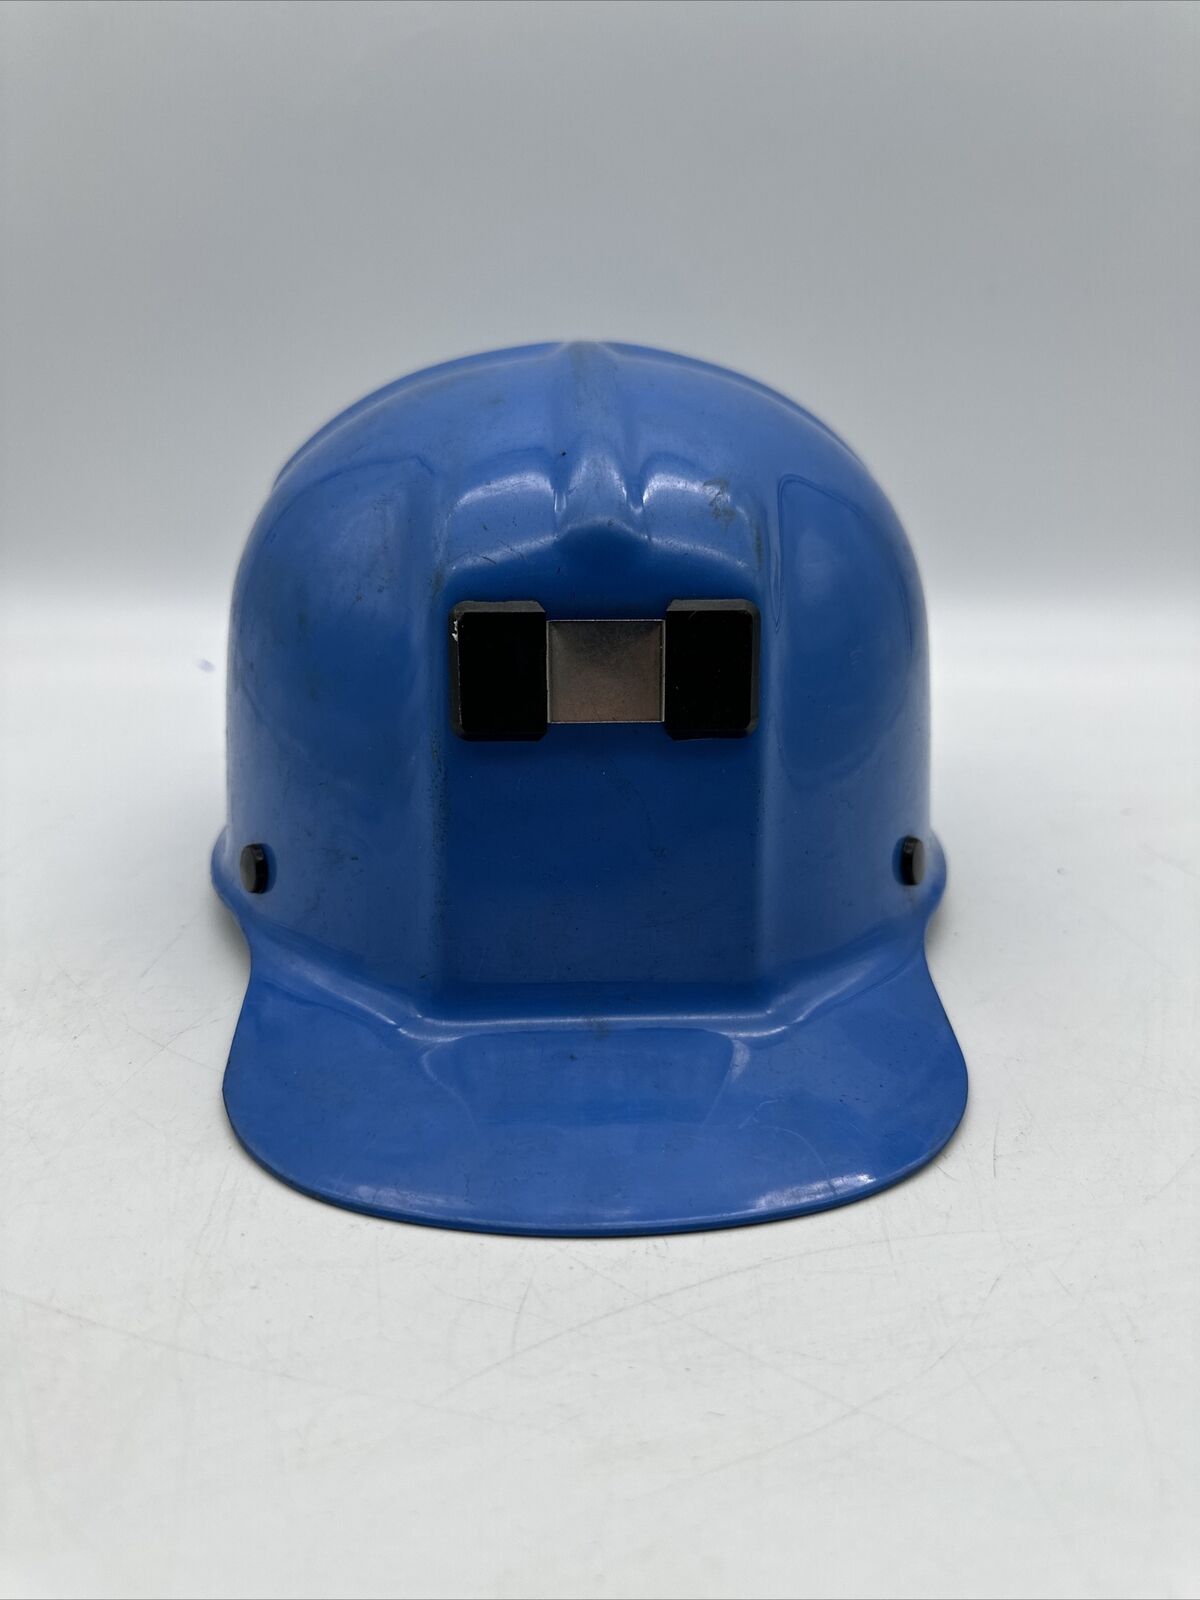 MSA Comfo Cap Low Vein Miners Hard Hat~1970’s